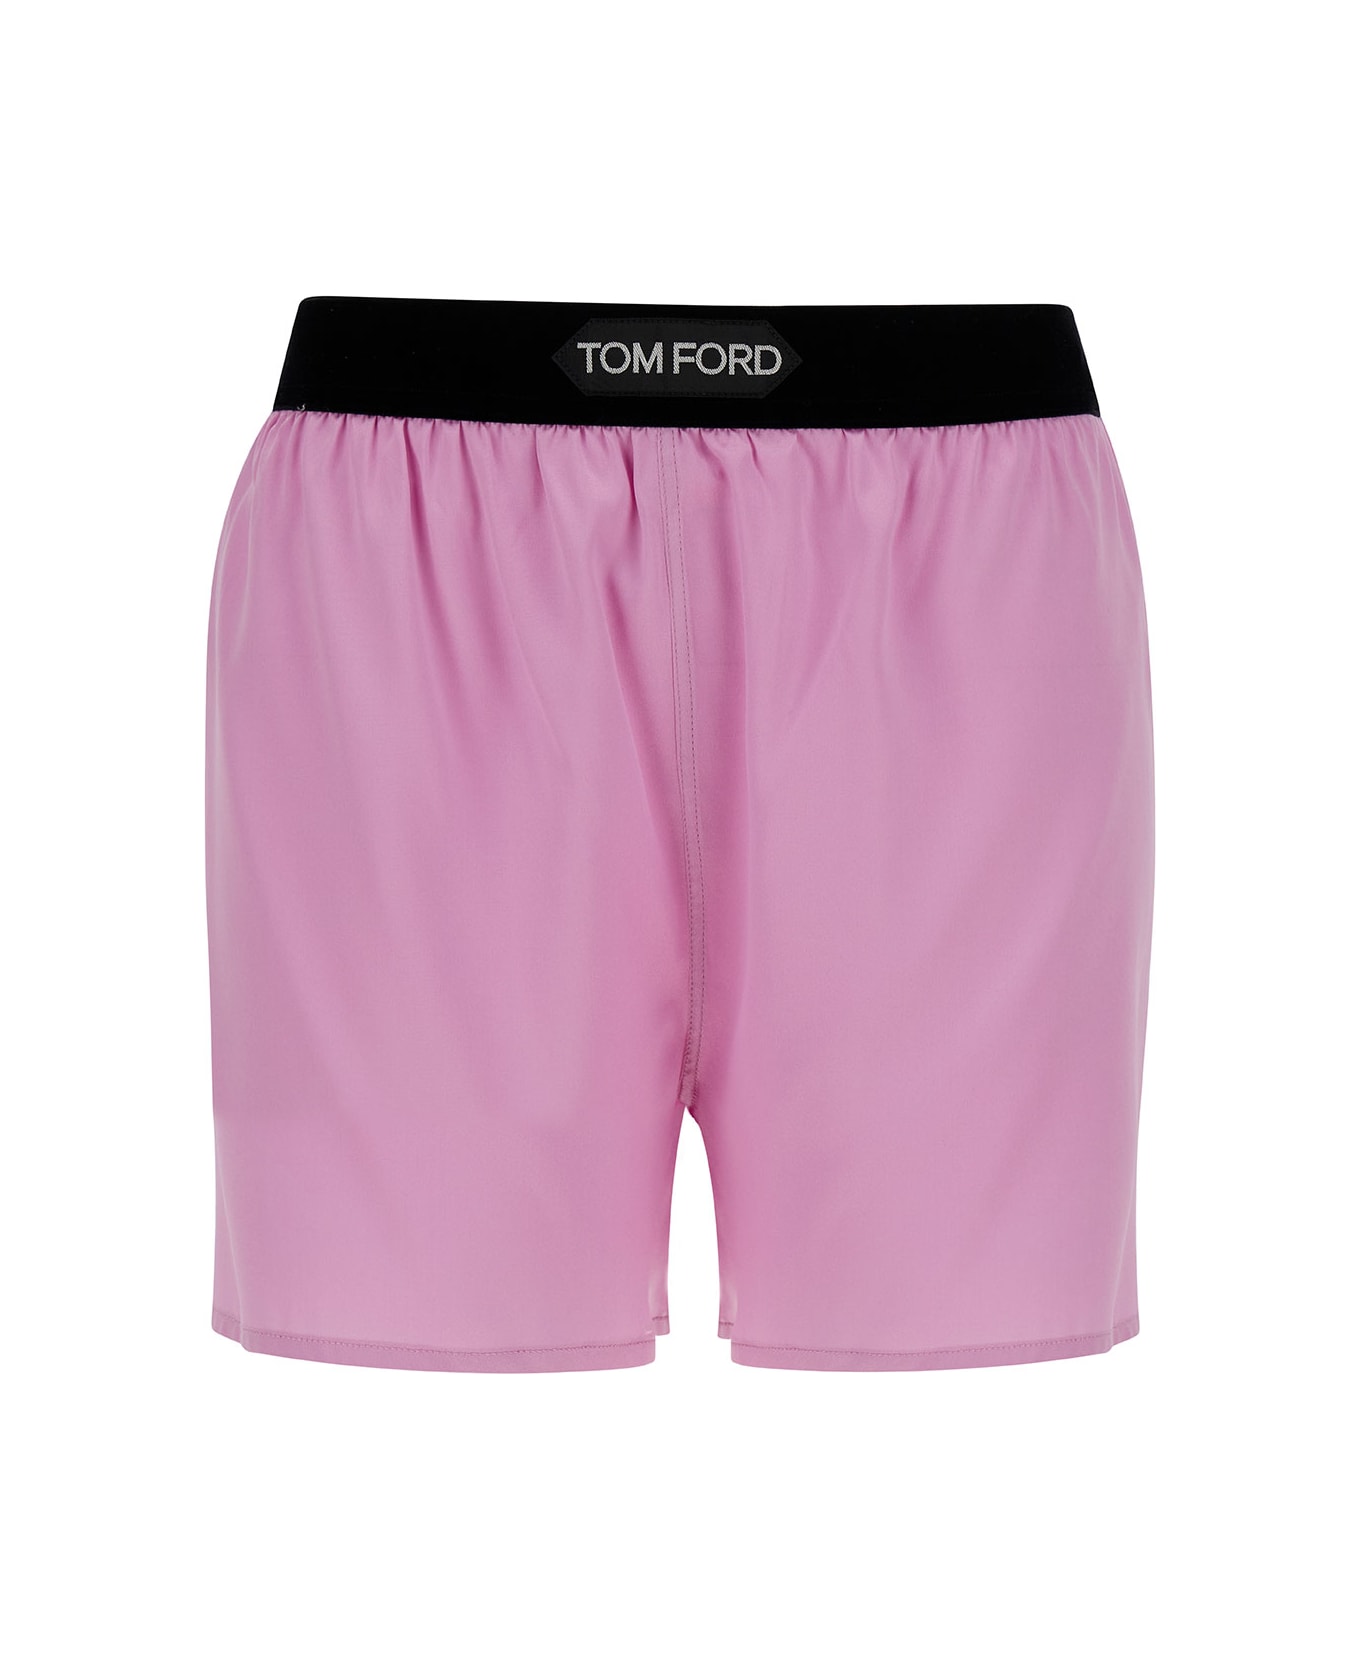 Tom Ford Stretch Silk Satin Boxer Shorts - Pink